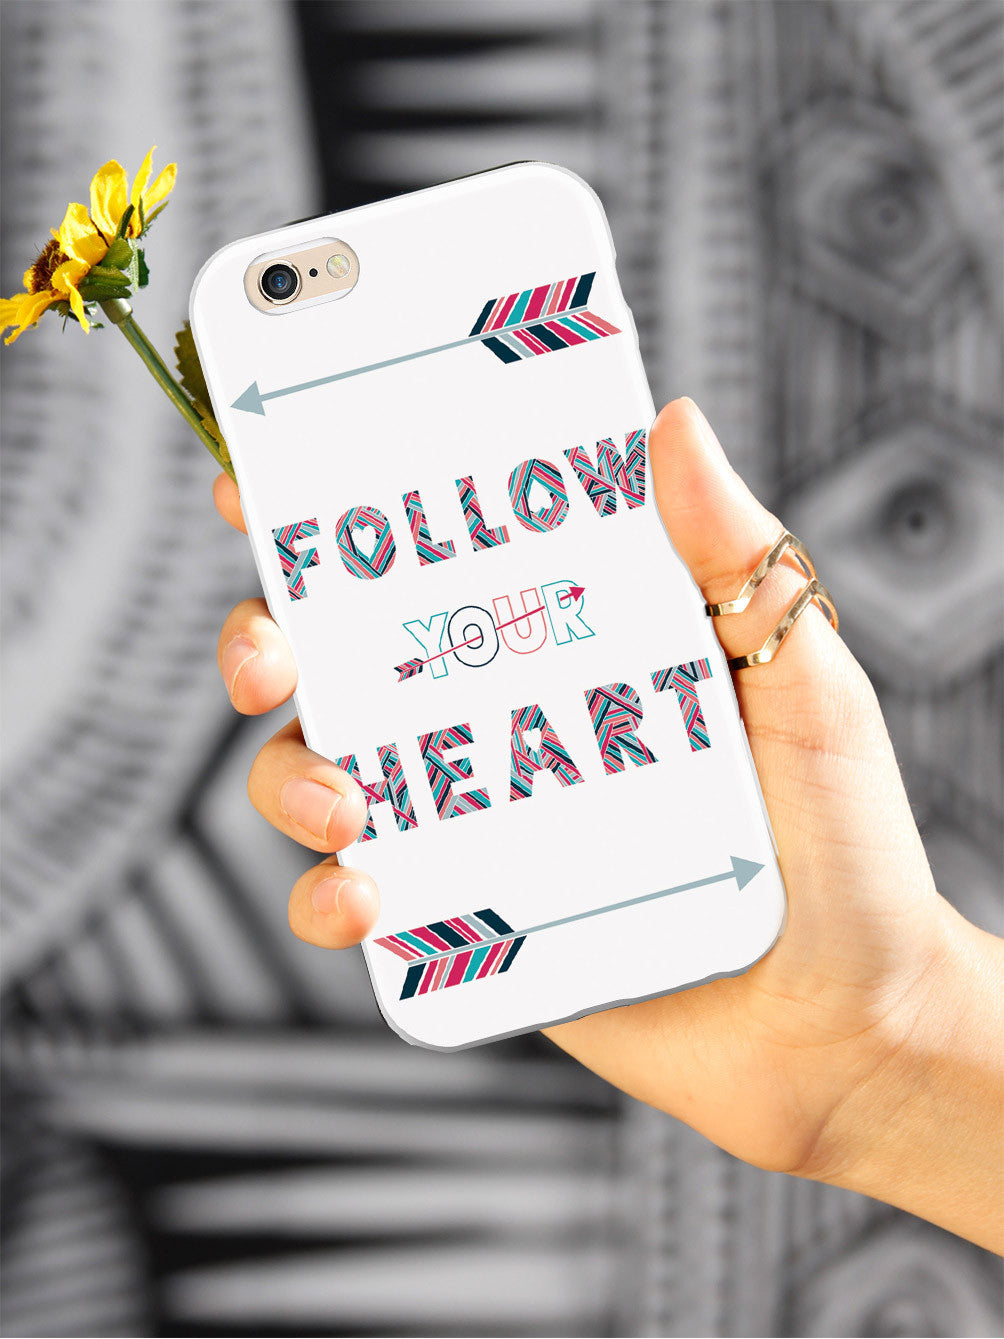 Follow Your Heart Case